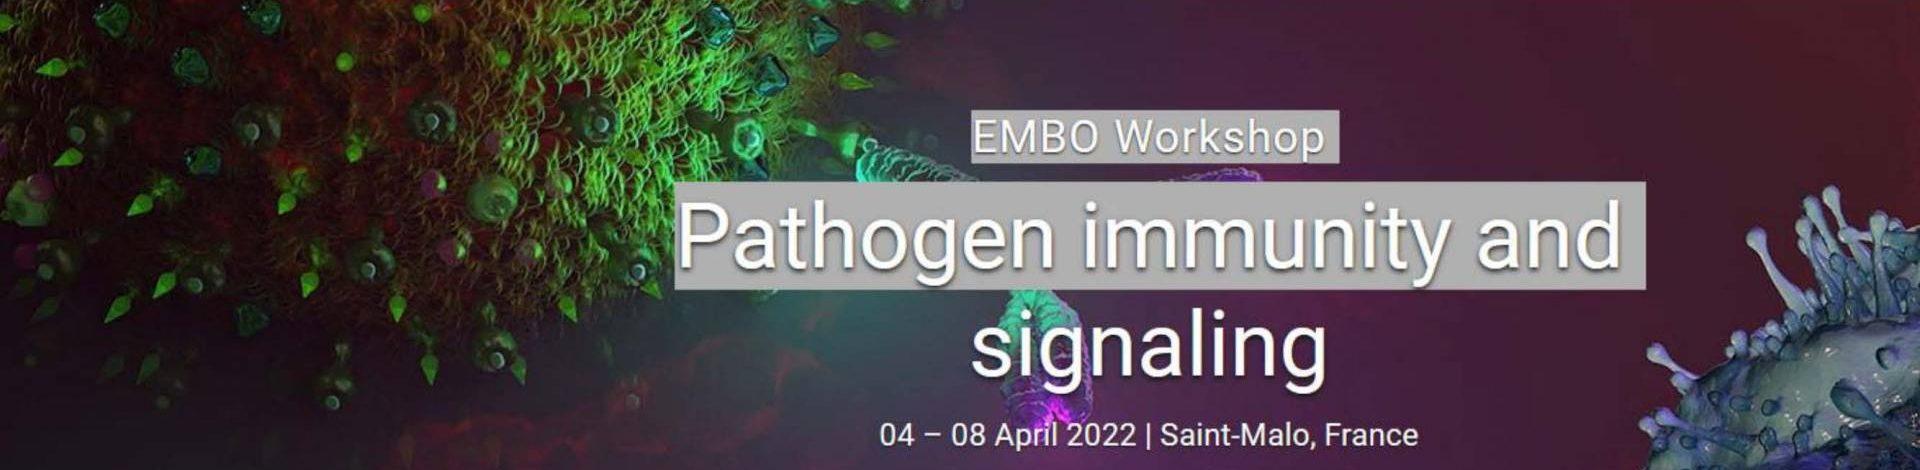 VIsual Slide EMBO WORSHOP - Pathogen immunity and signaling - April 4-8, 2022